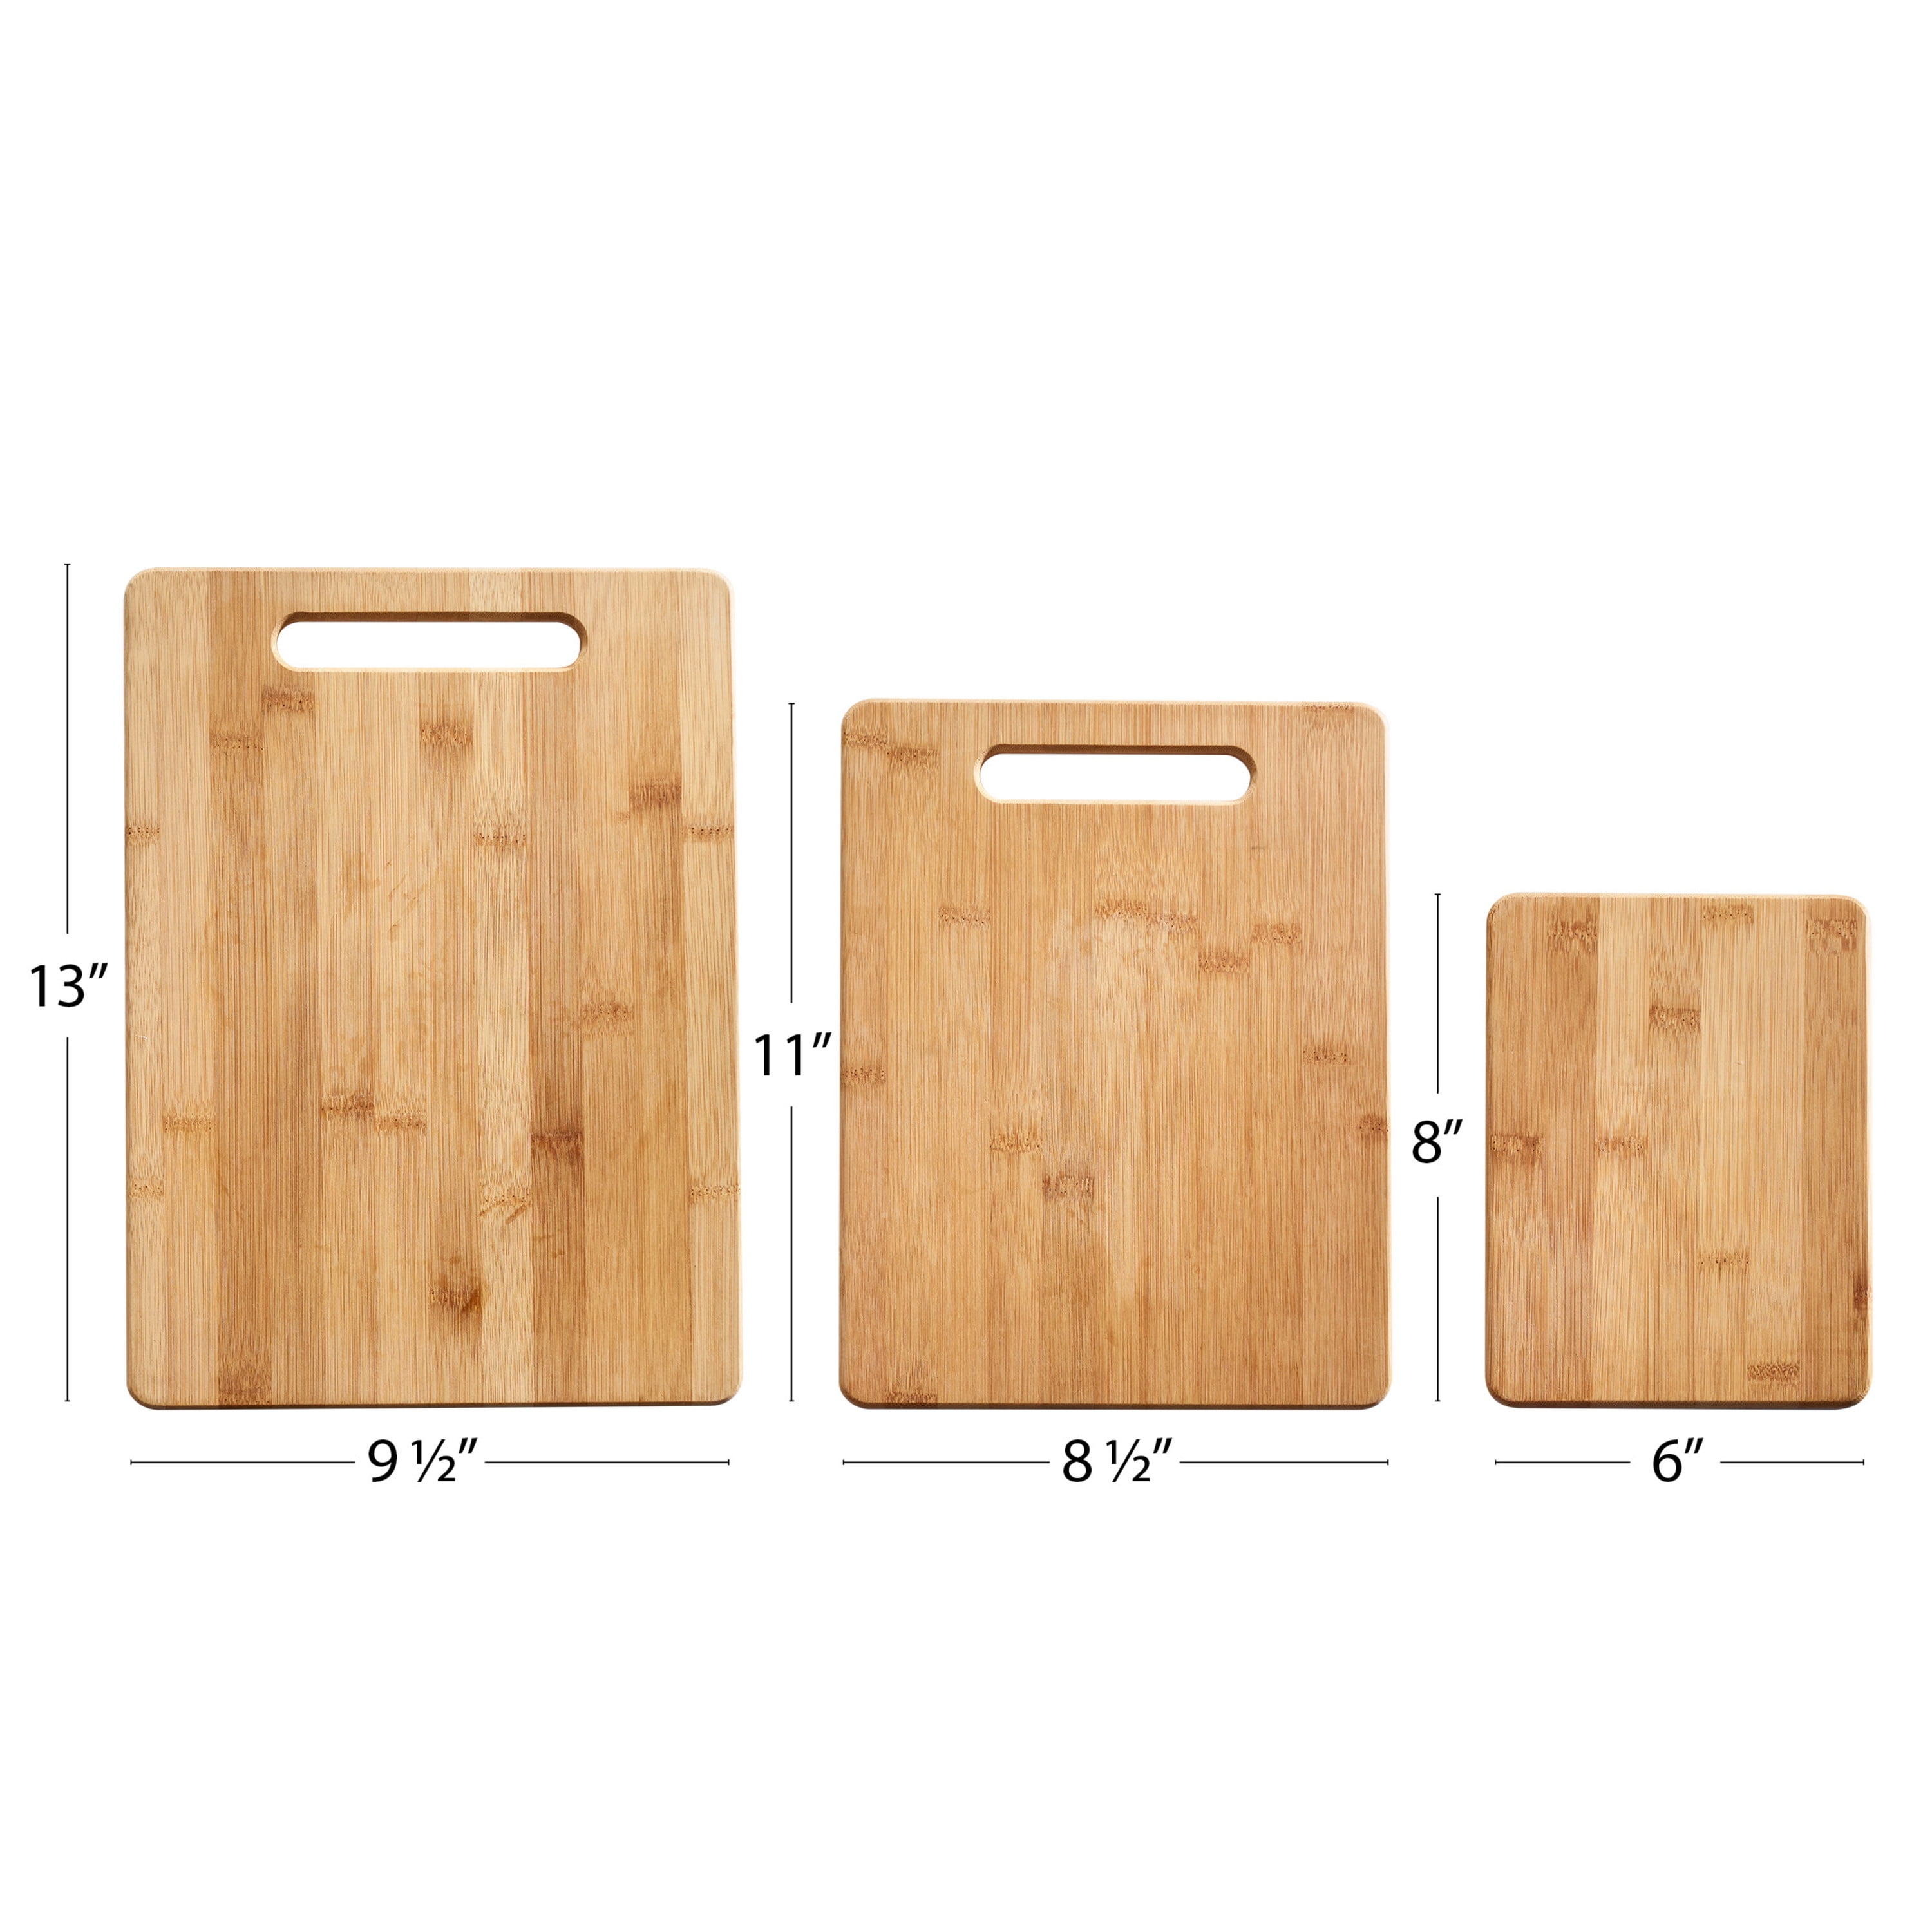 11 x8.5” Culina Bamboo Wood Cutting Board Set of 3 Sizes: 8 x6” 13 x9” 